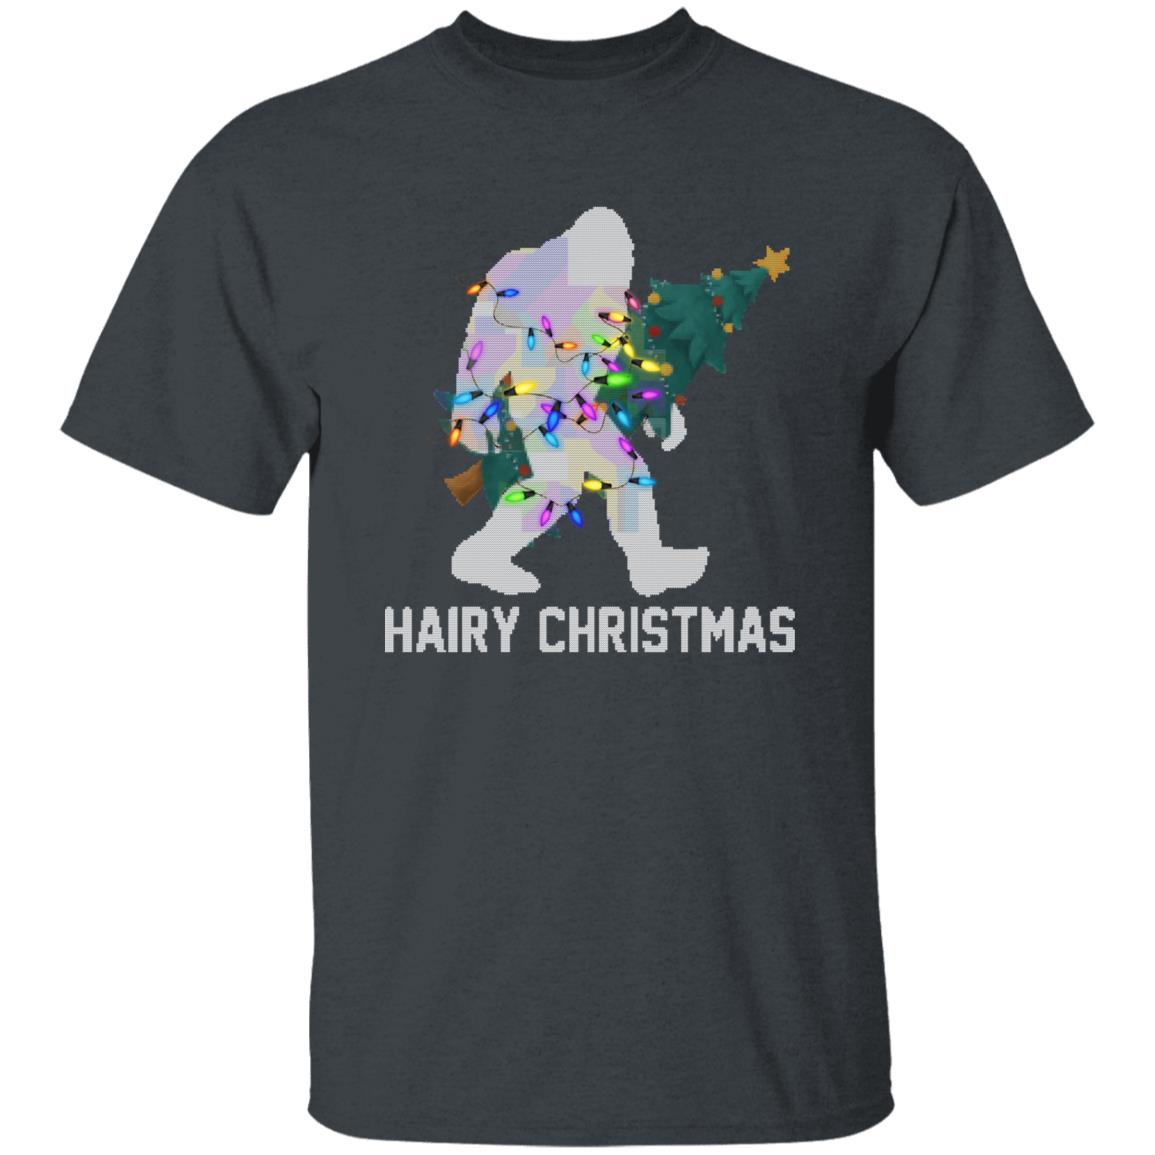 Hairy Christmas Unisex shirt Big foot Holiday tee Black Dark Heather-Family-Gift-Planet